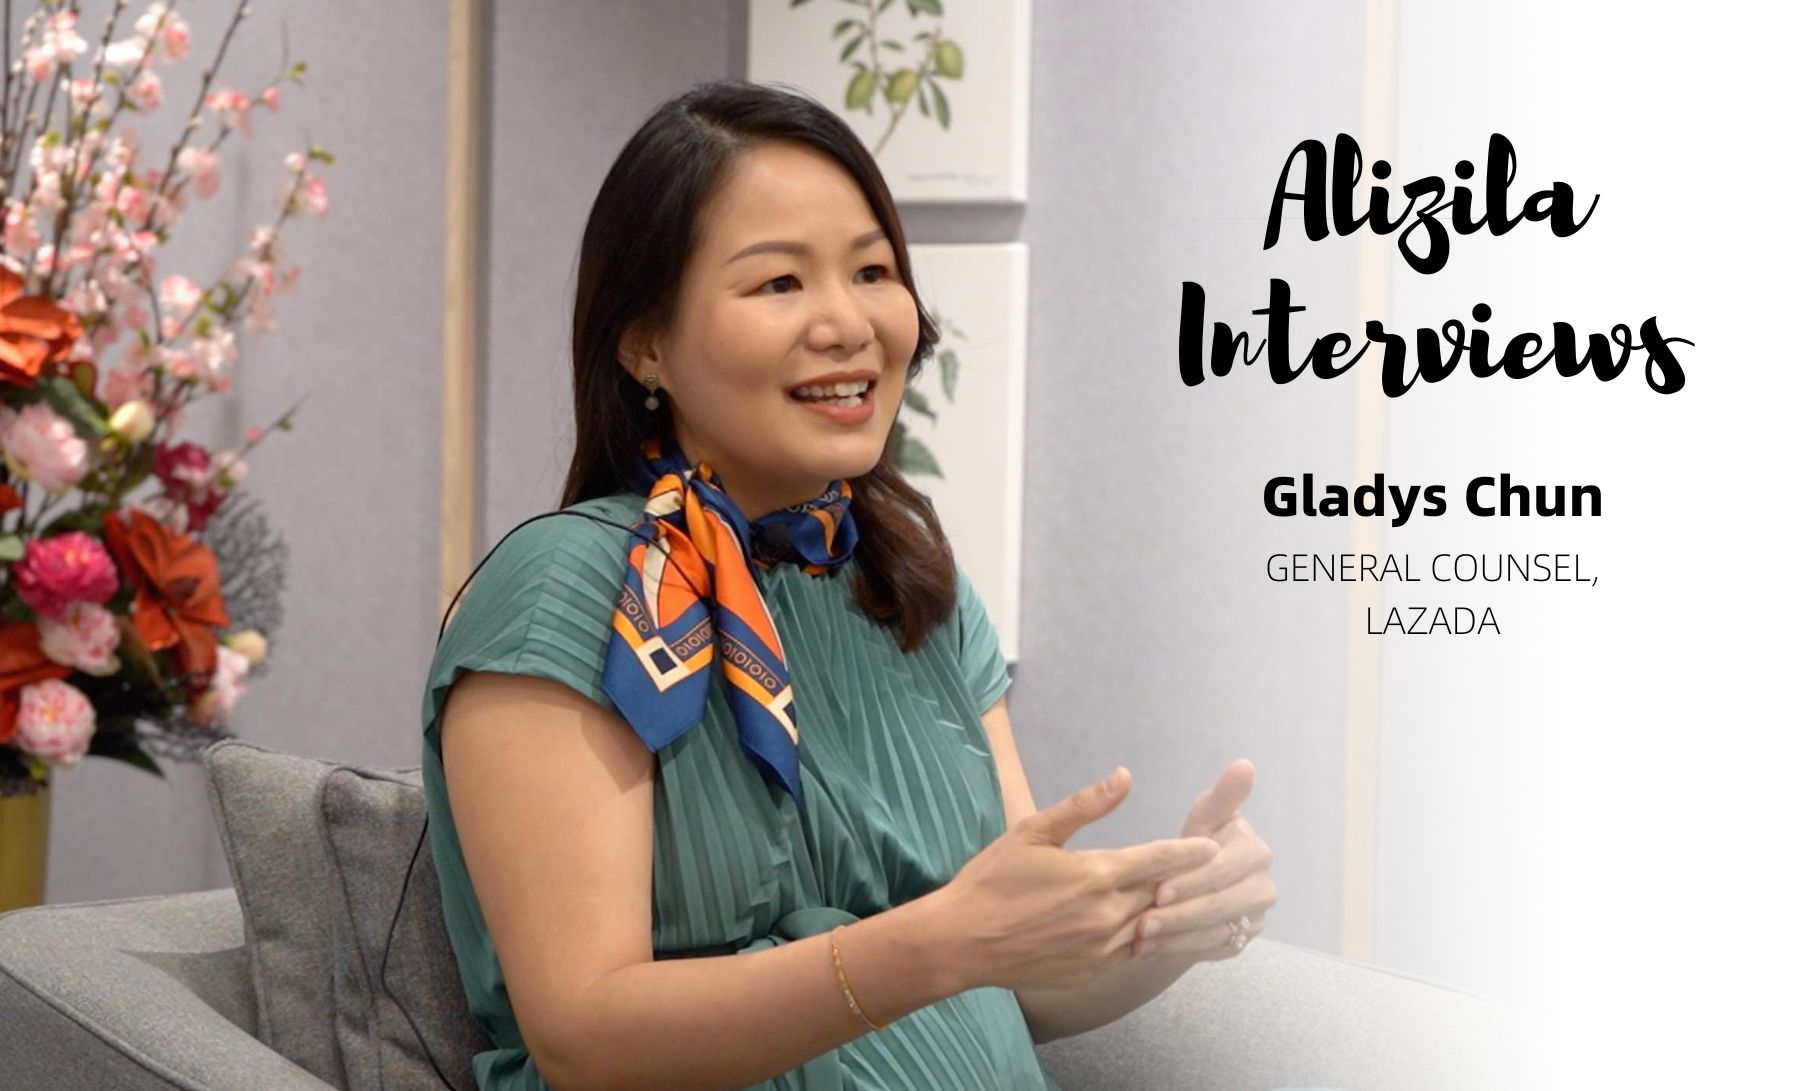 Gladys Chun Alizila Interview